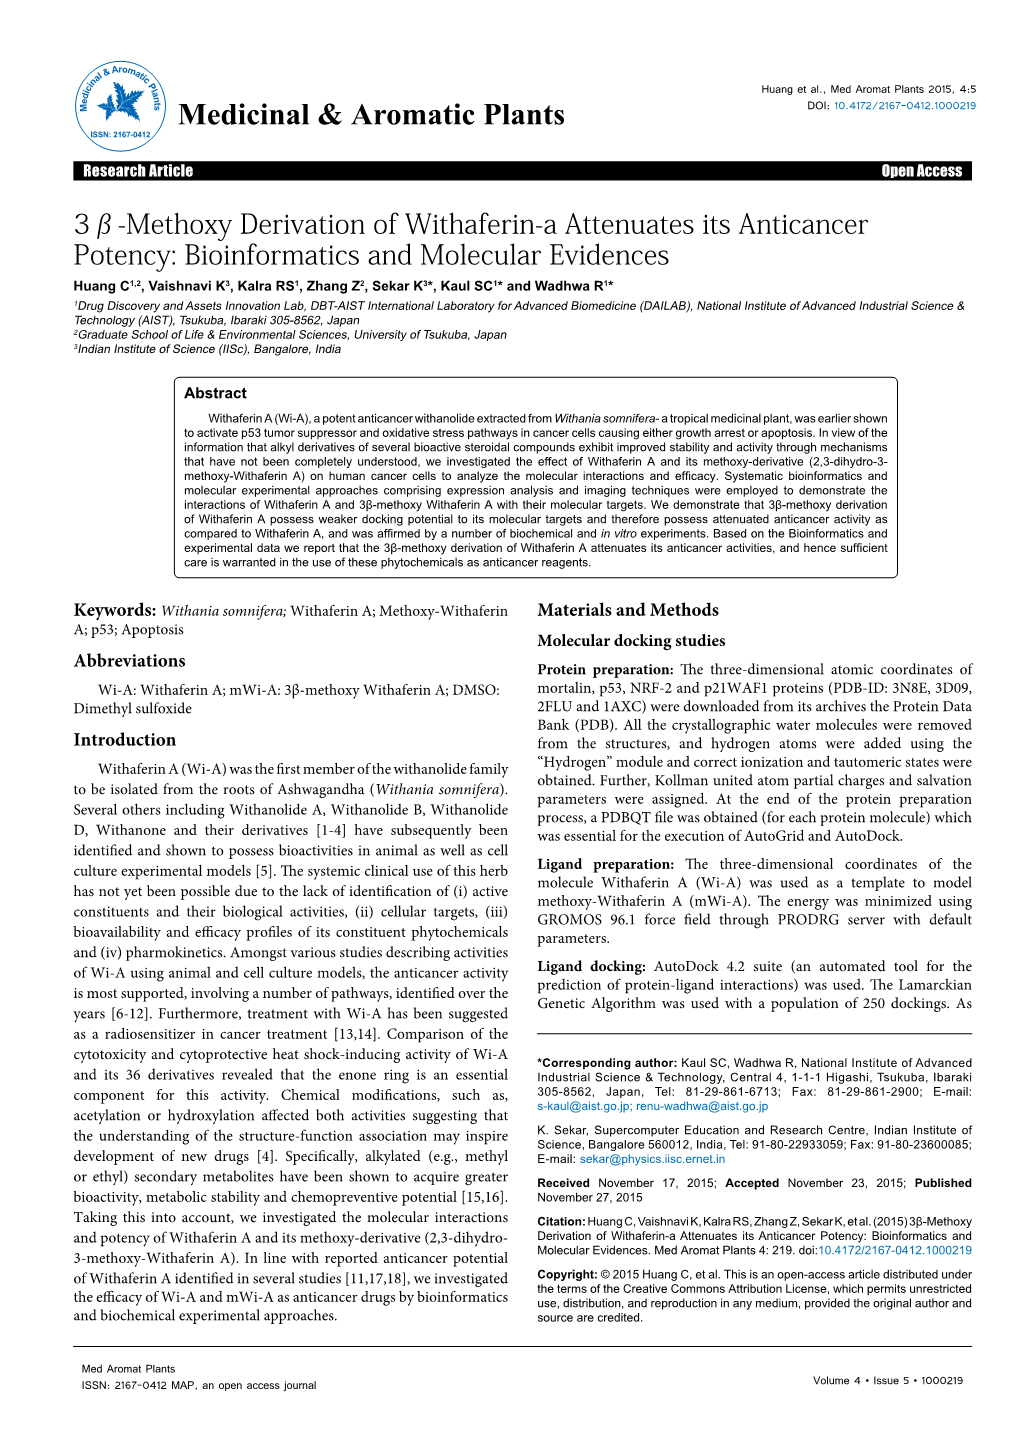 Bioinformatics and Molecular Evidences